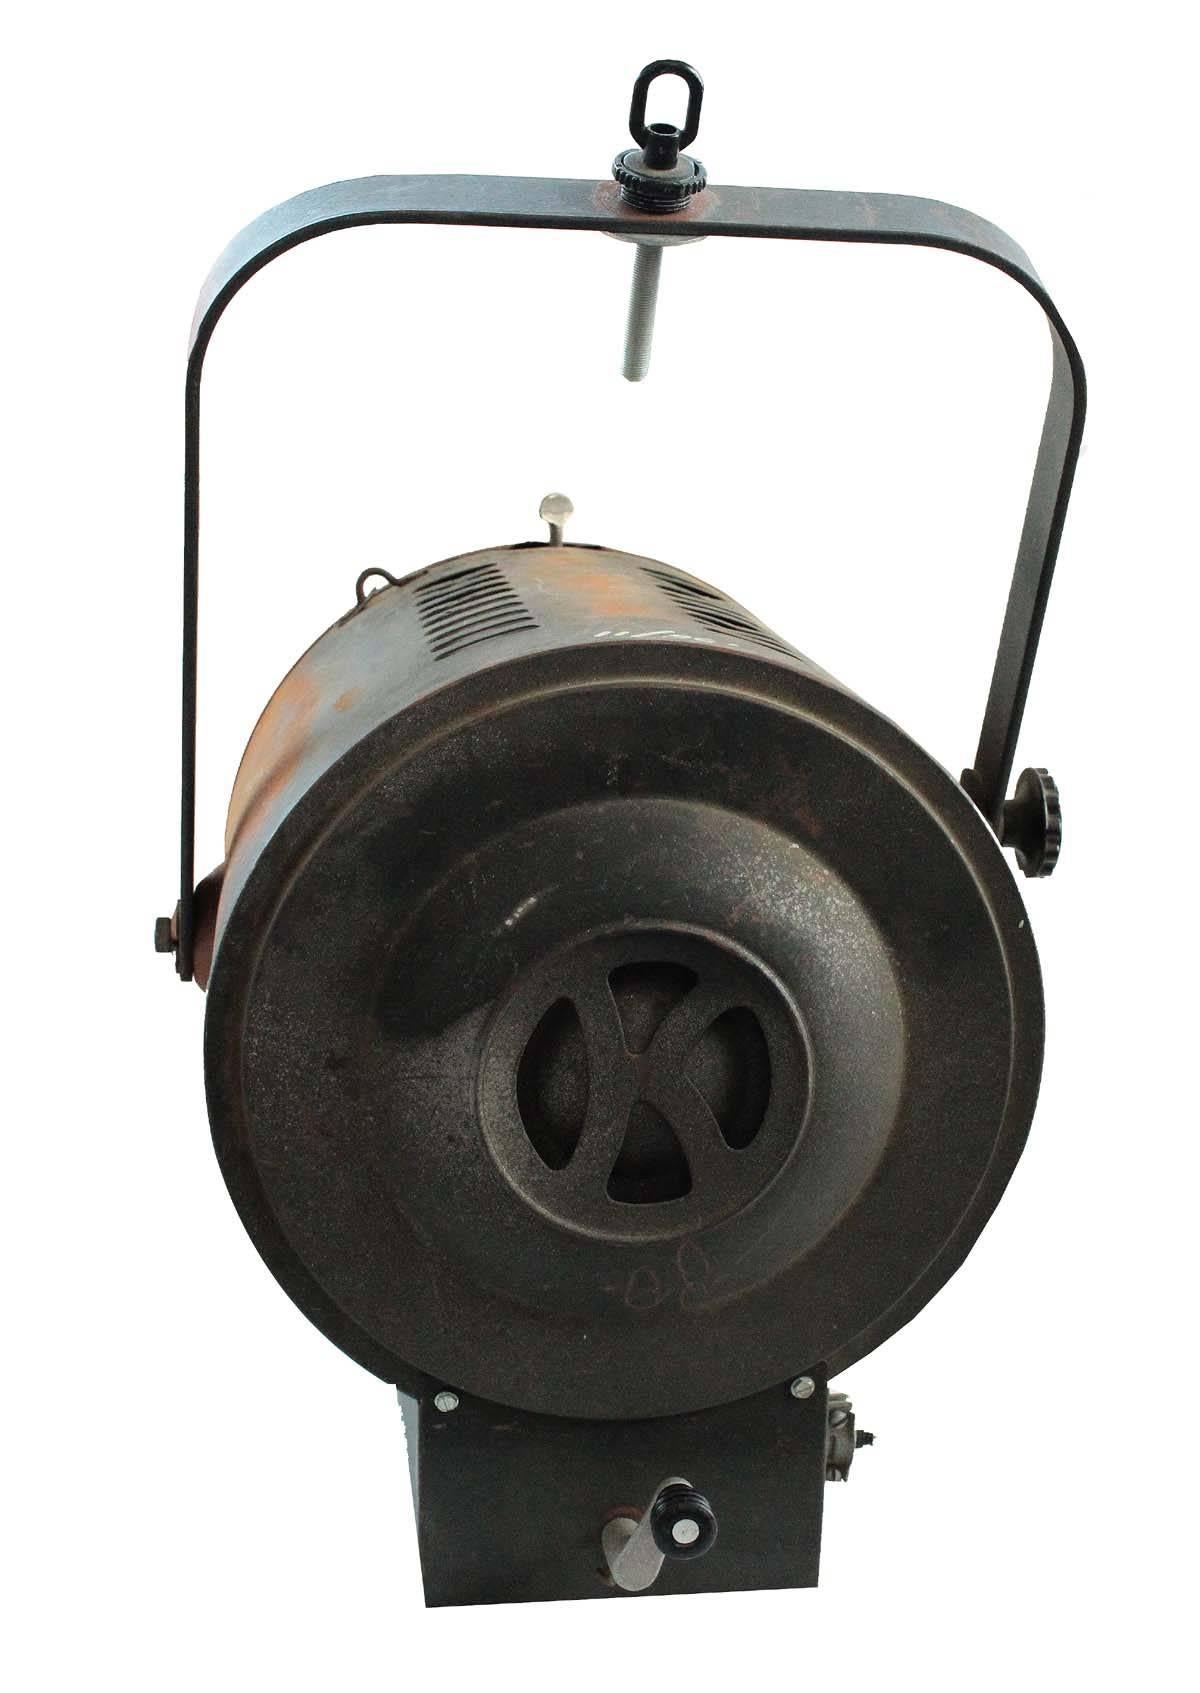 Original theater light, original spiral lens, adjustable and rewired for standard plugs